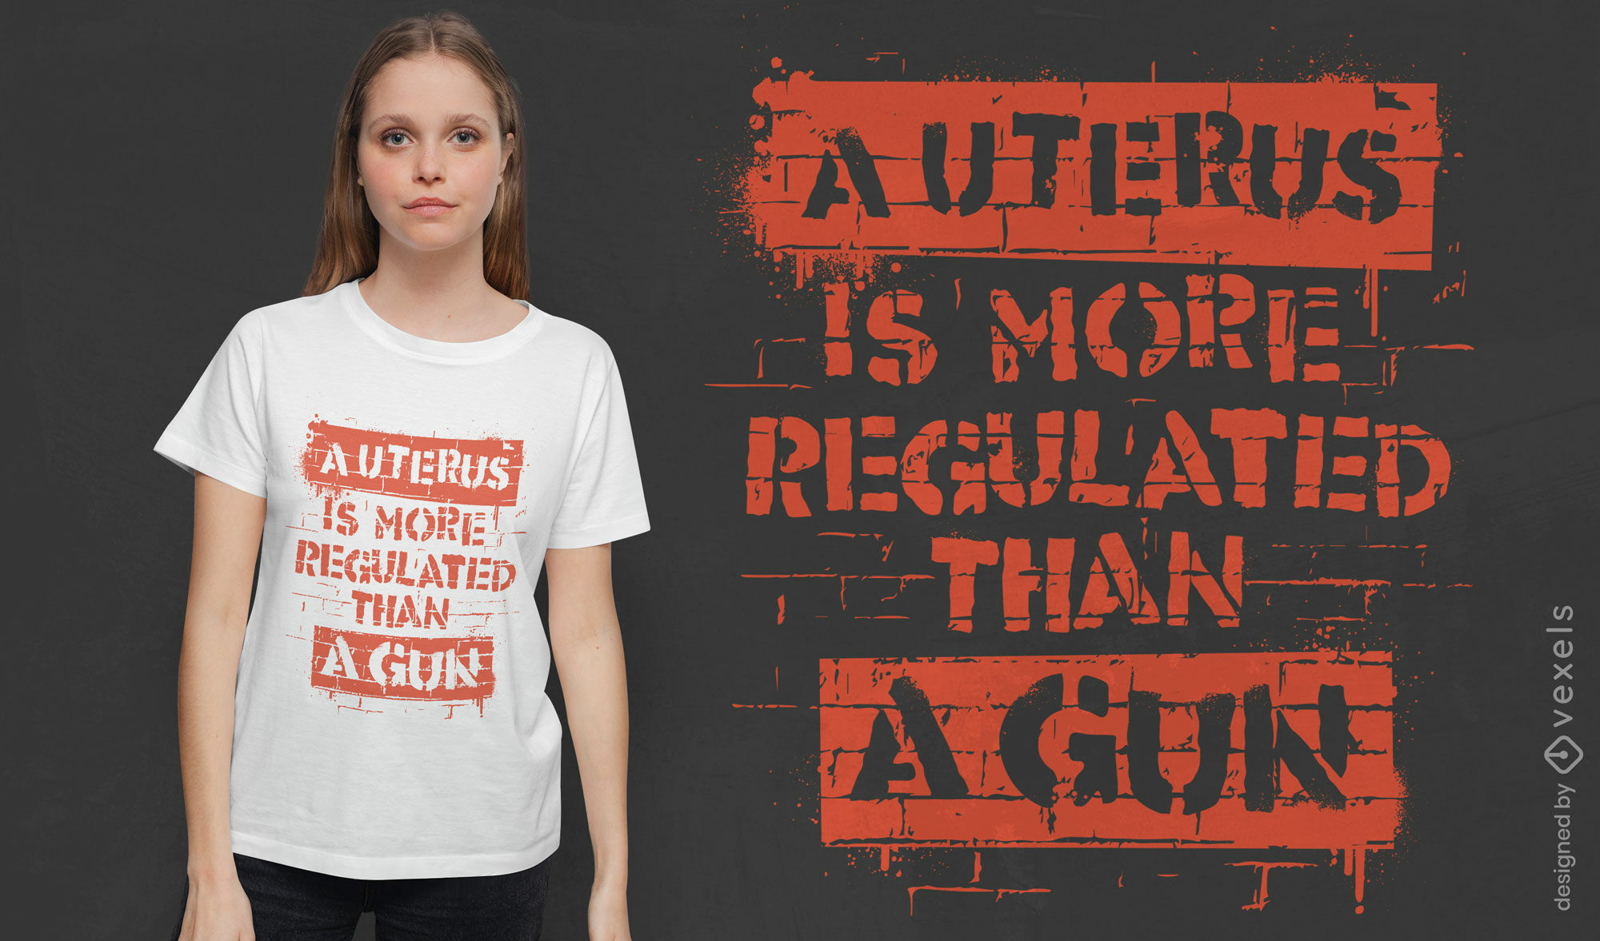 Dise?o de camiseta con cita anti regulaci?n del ?tero.